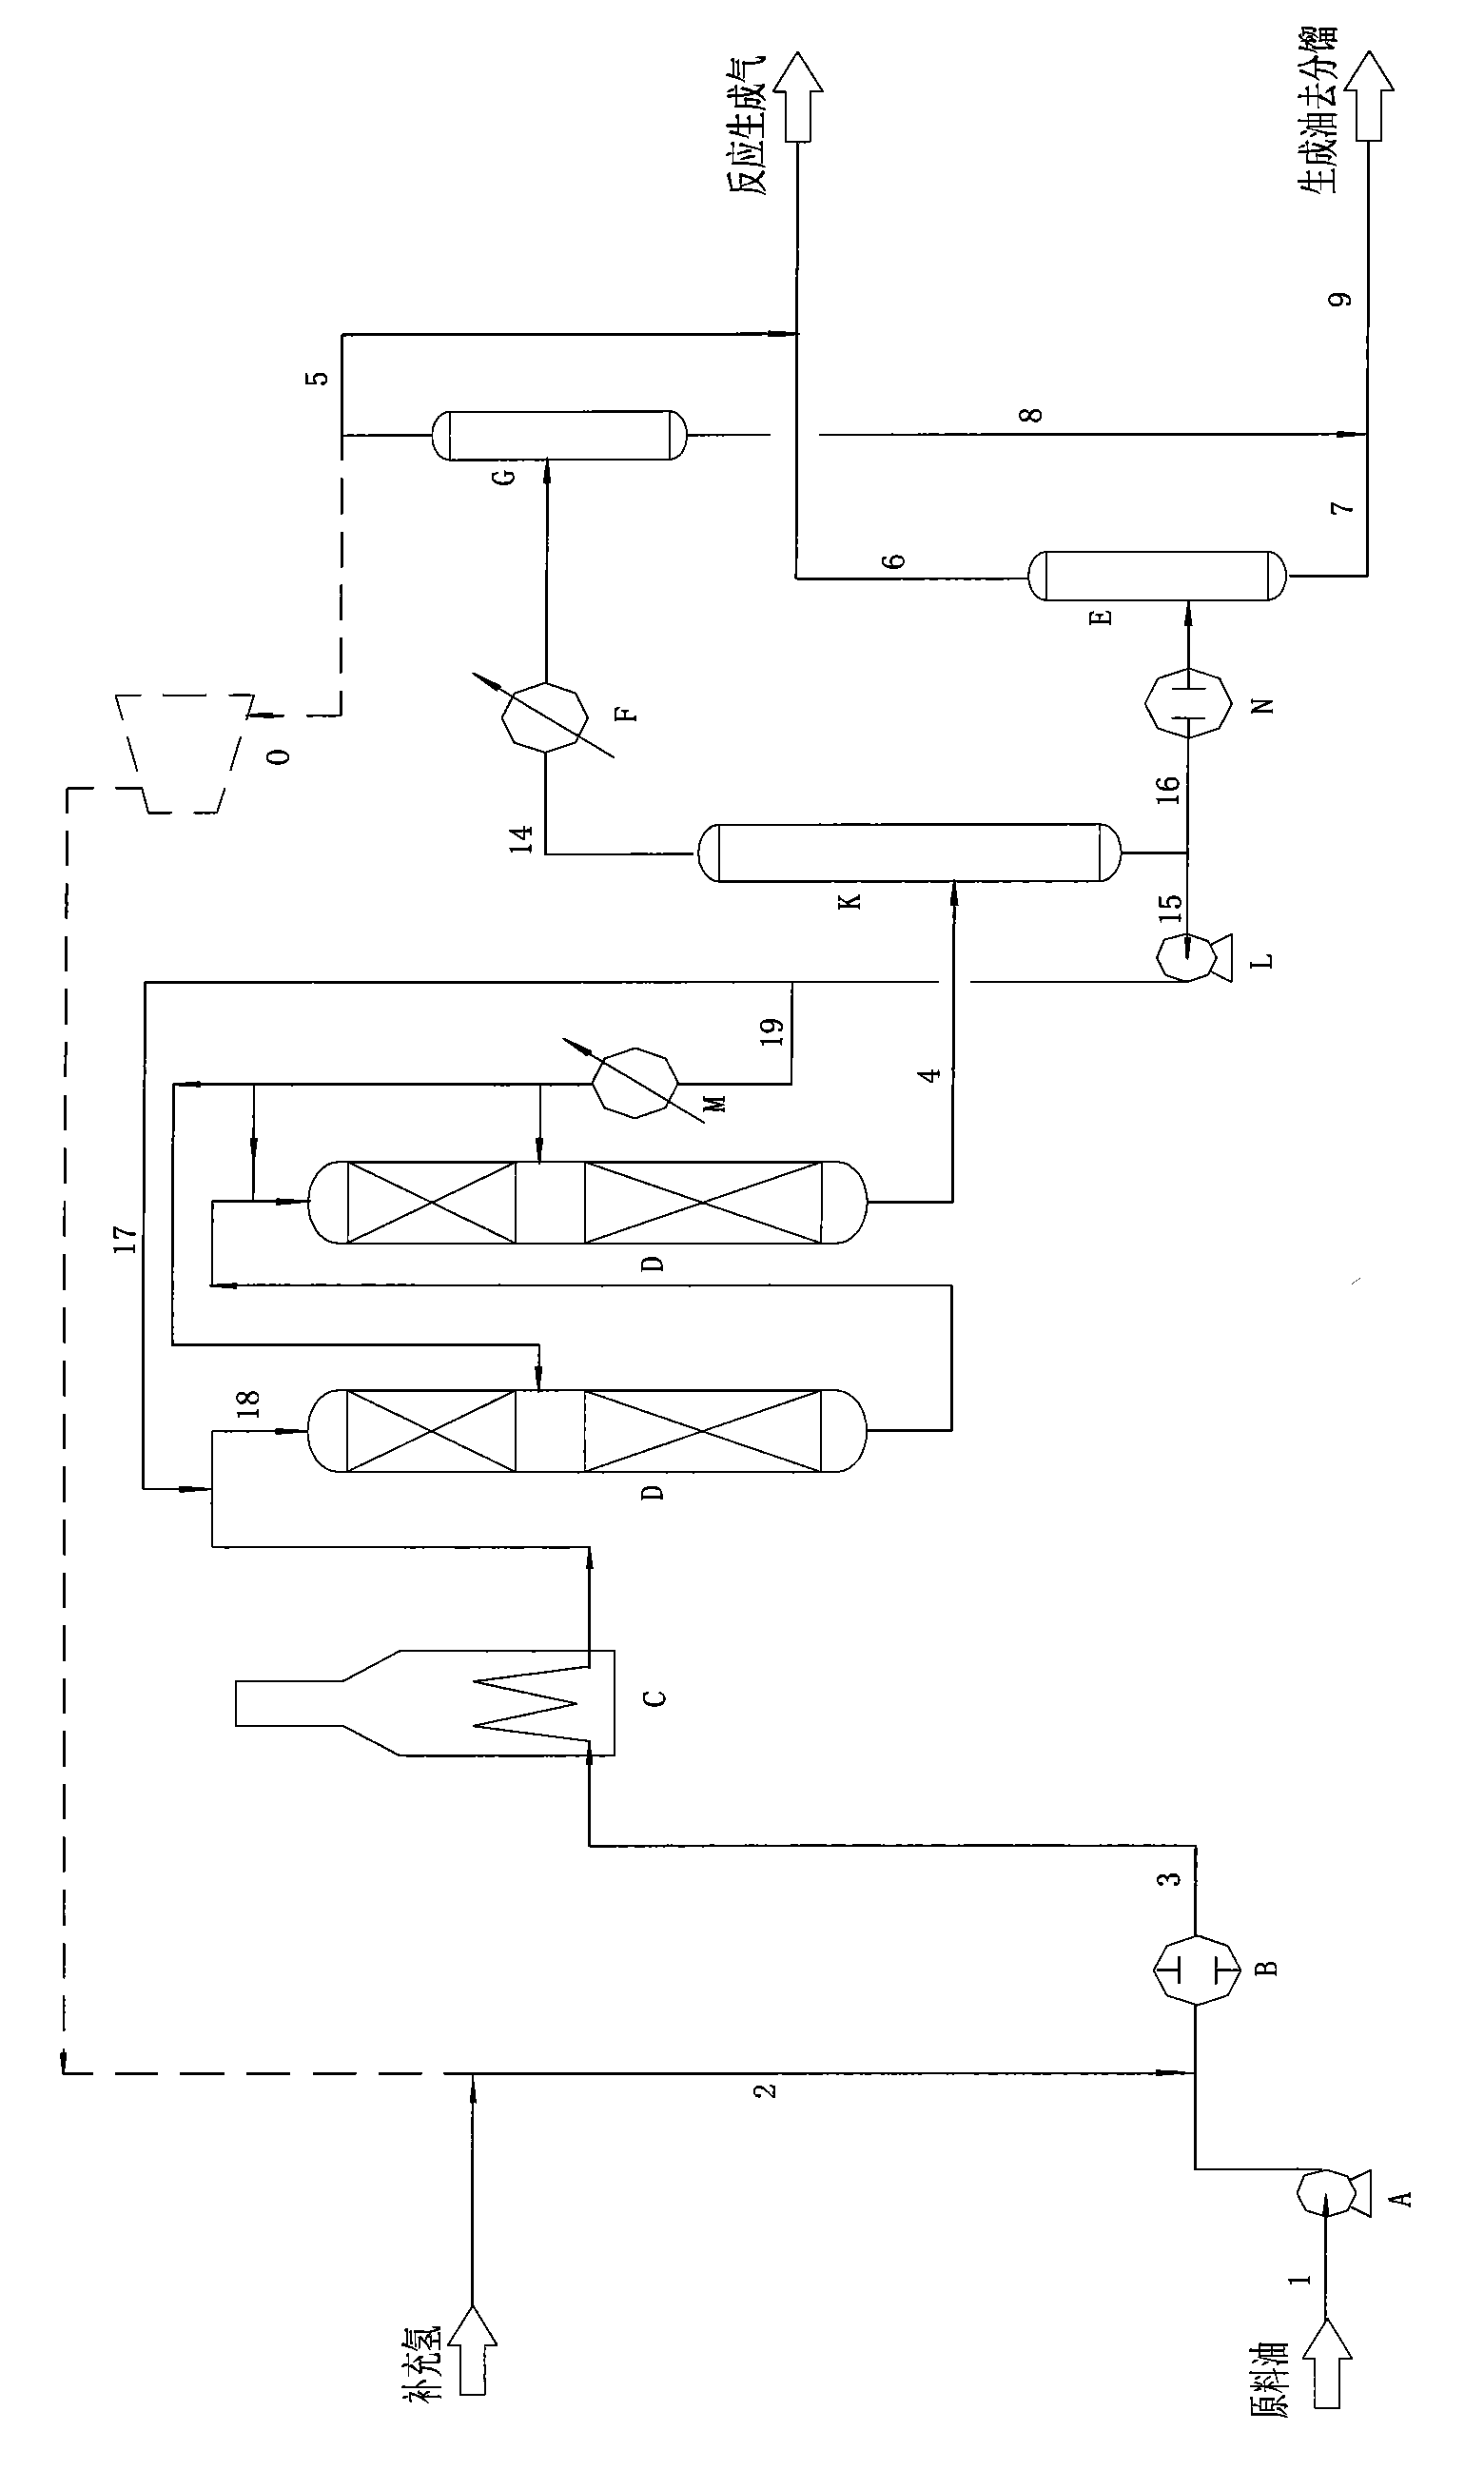 Circulating liquid phase hydrogenation method